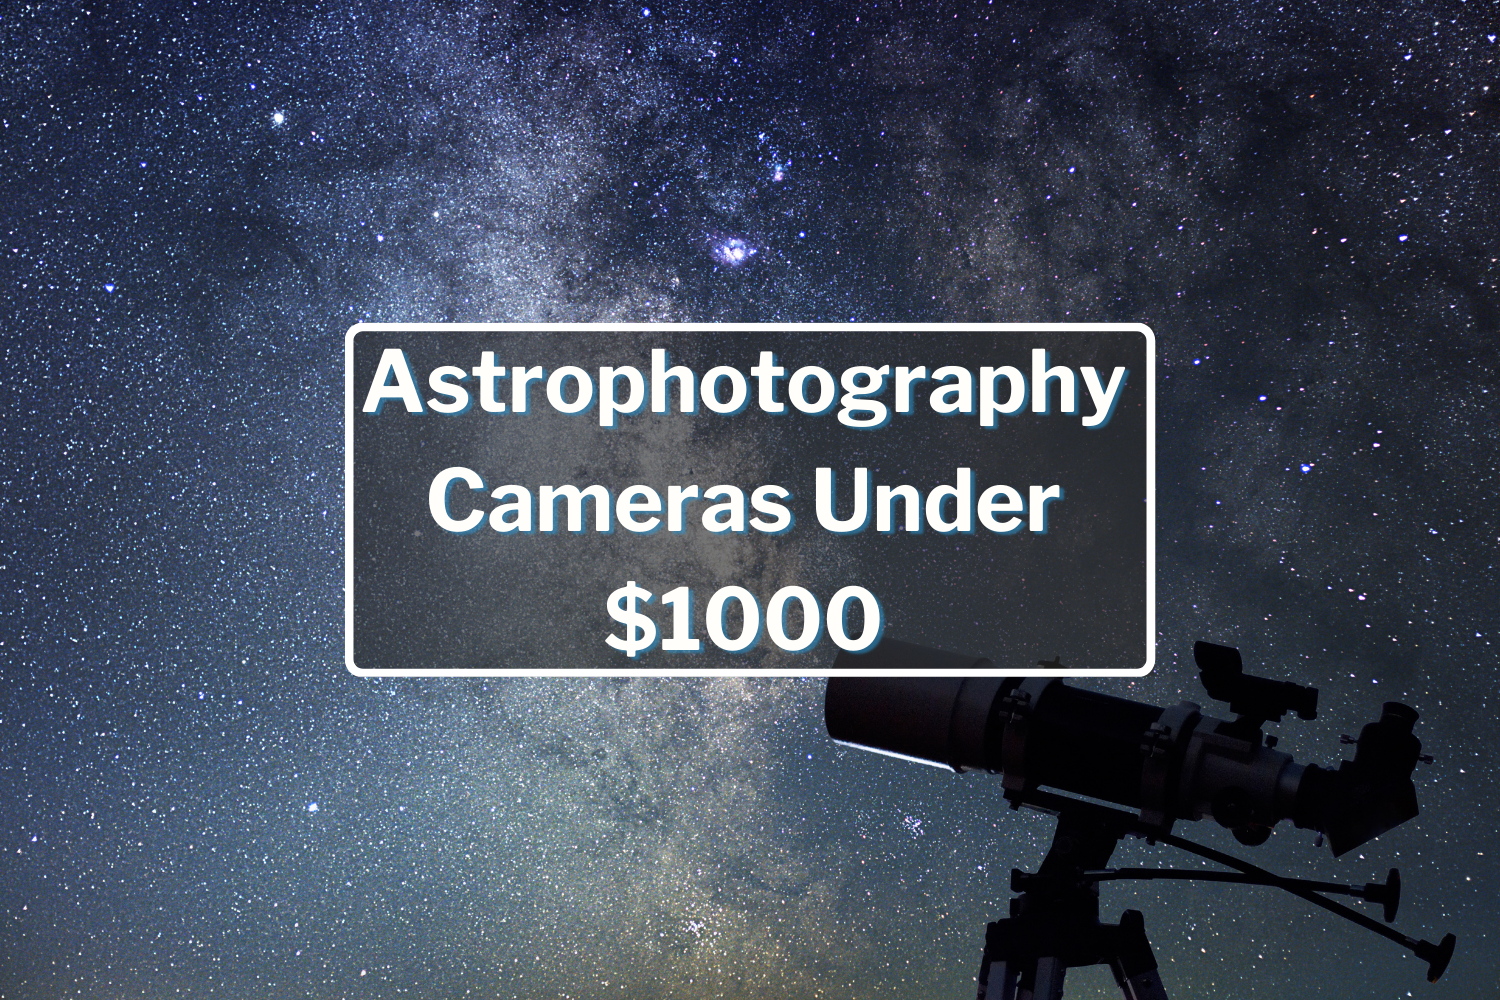 Astrophotography Cameras Under $1000